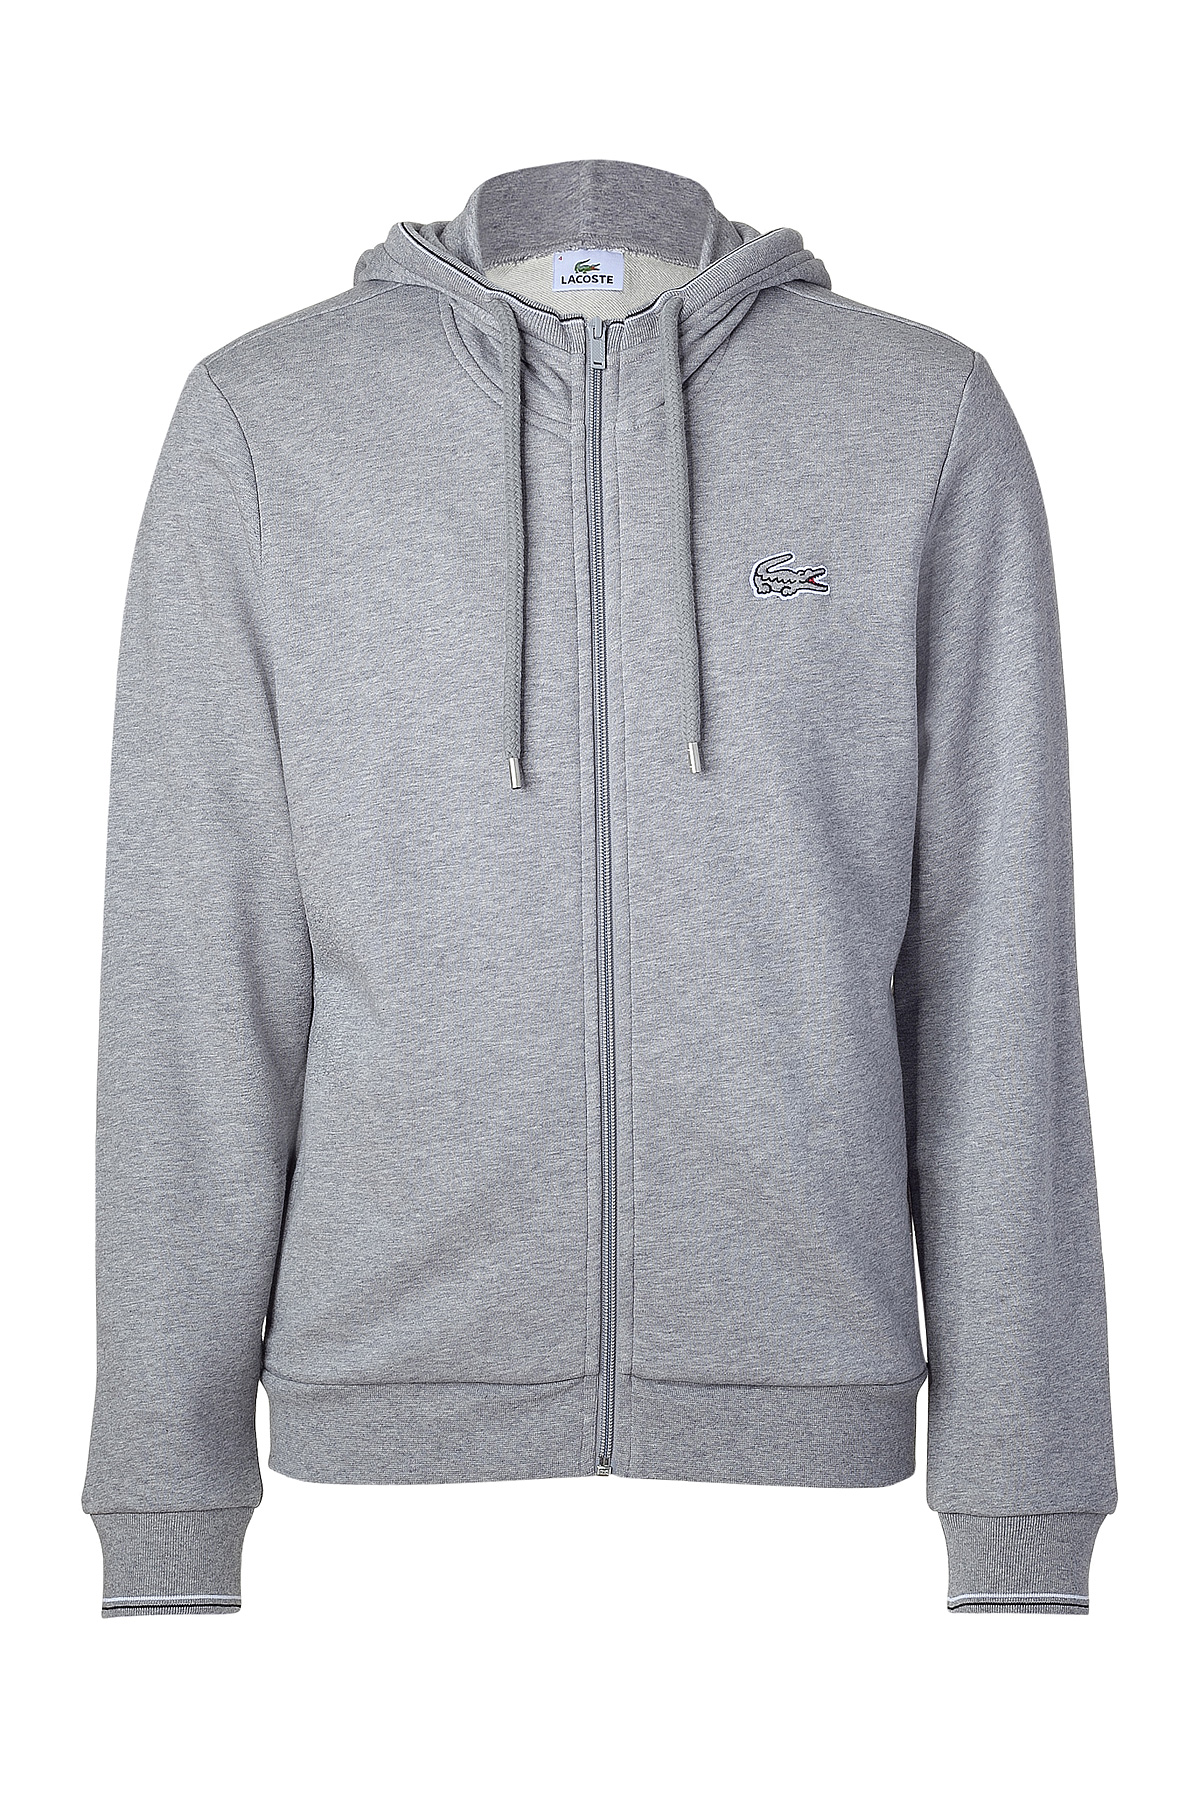 Lacoste Light Grey Hoodie Jacket in Gray for Men (grey) | Lyst